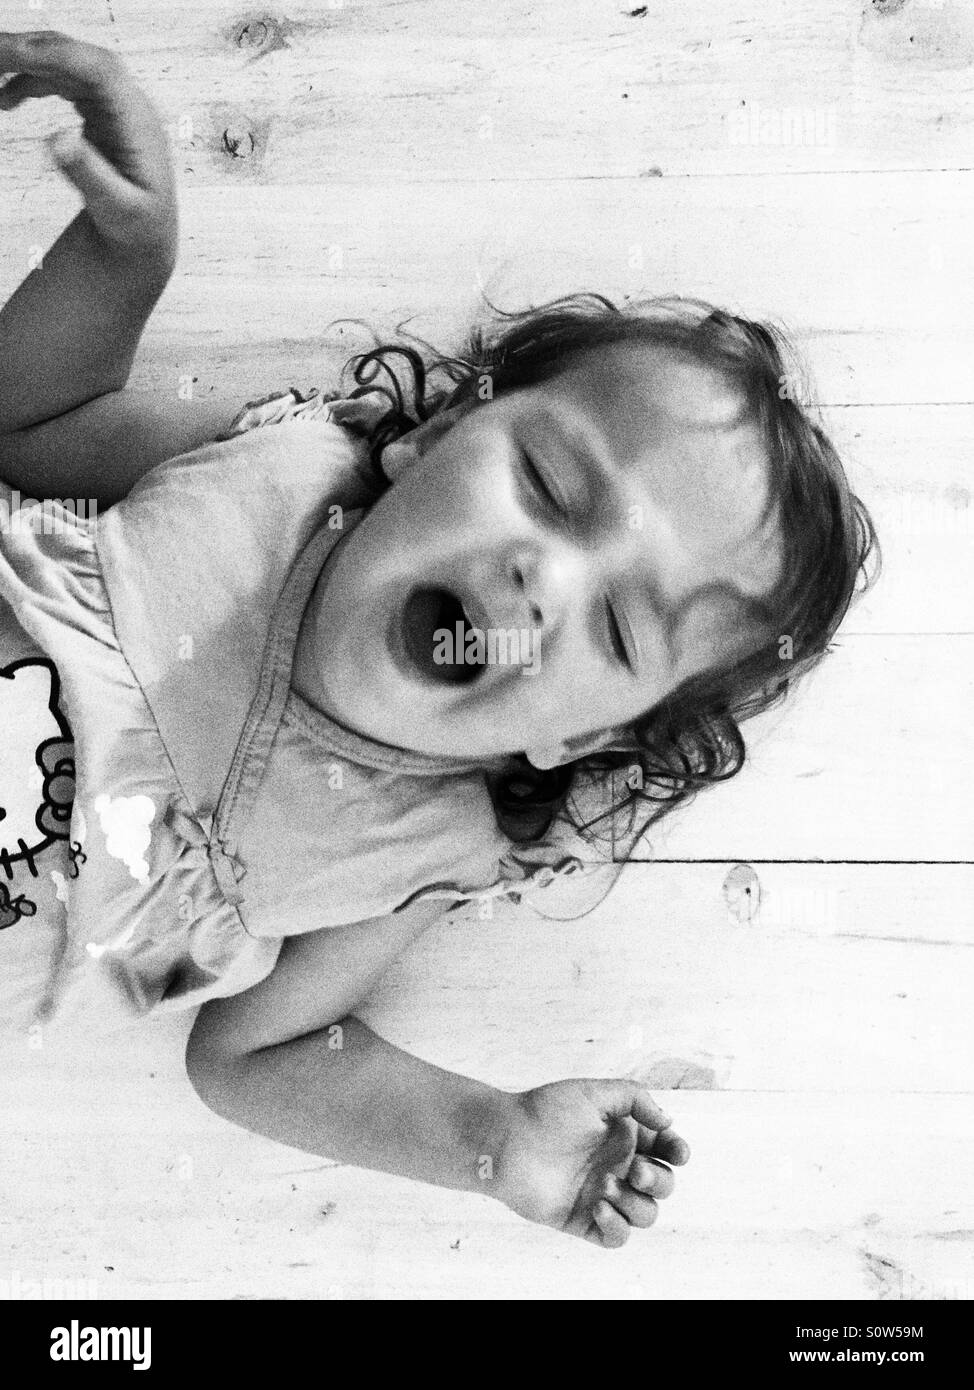 Toddler tantrum Stock Photo